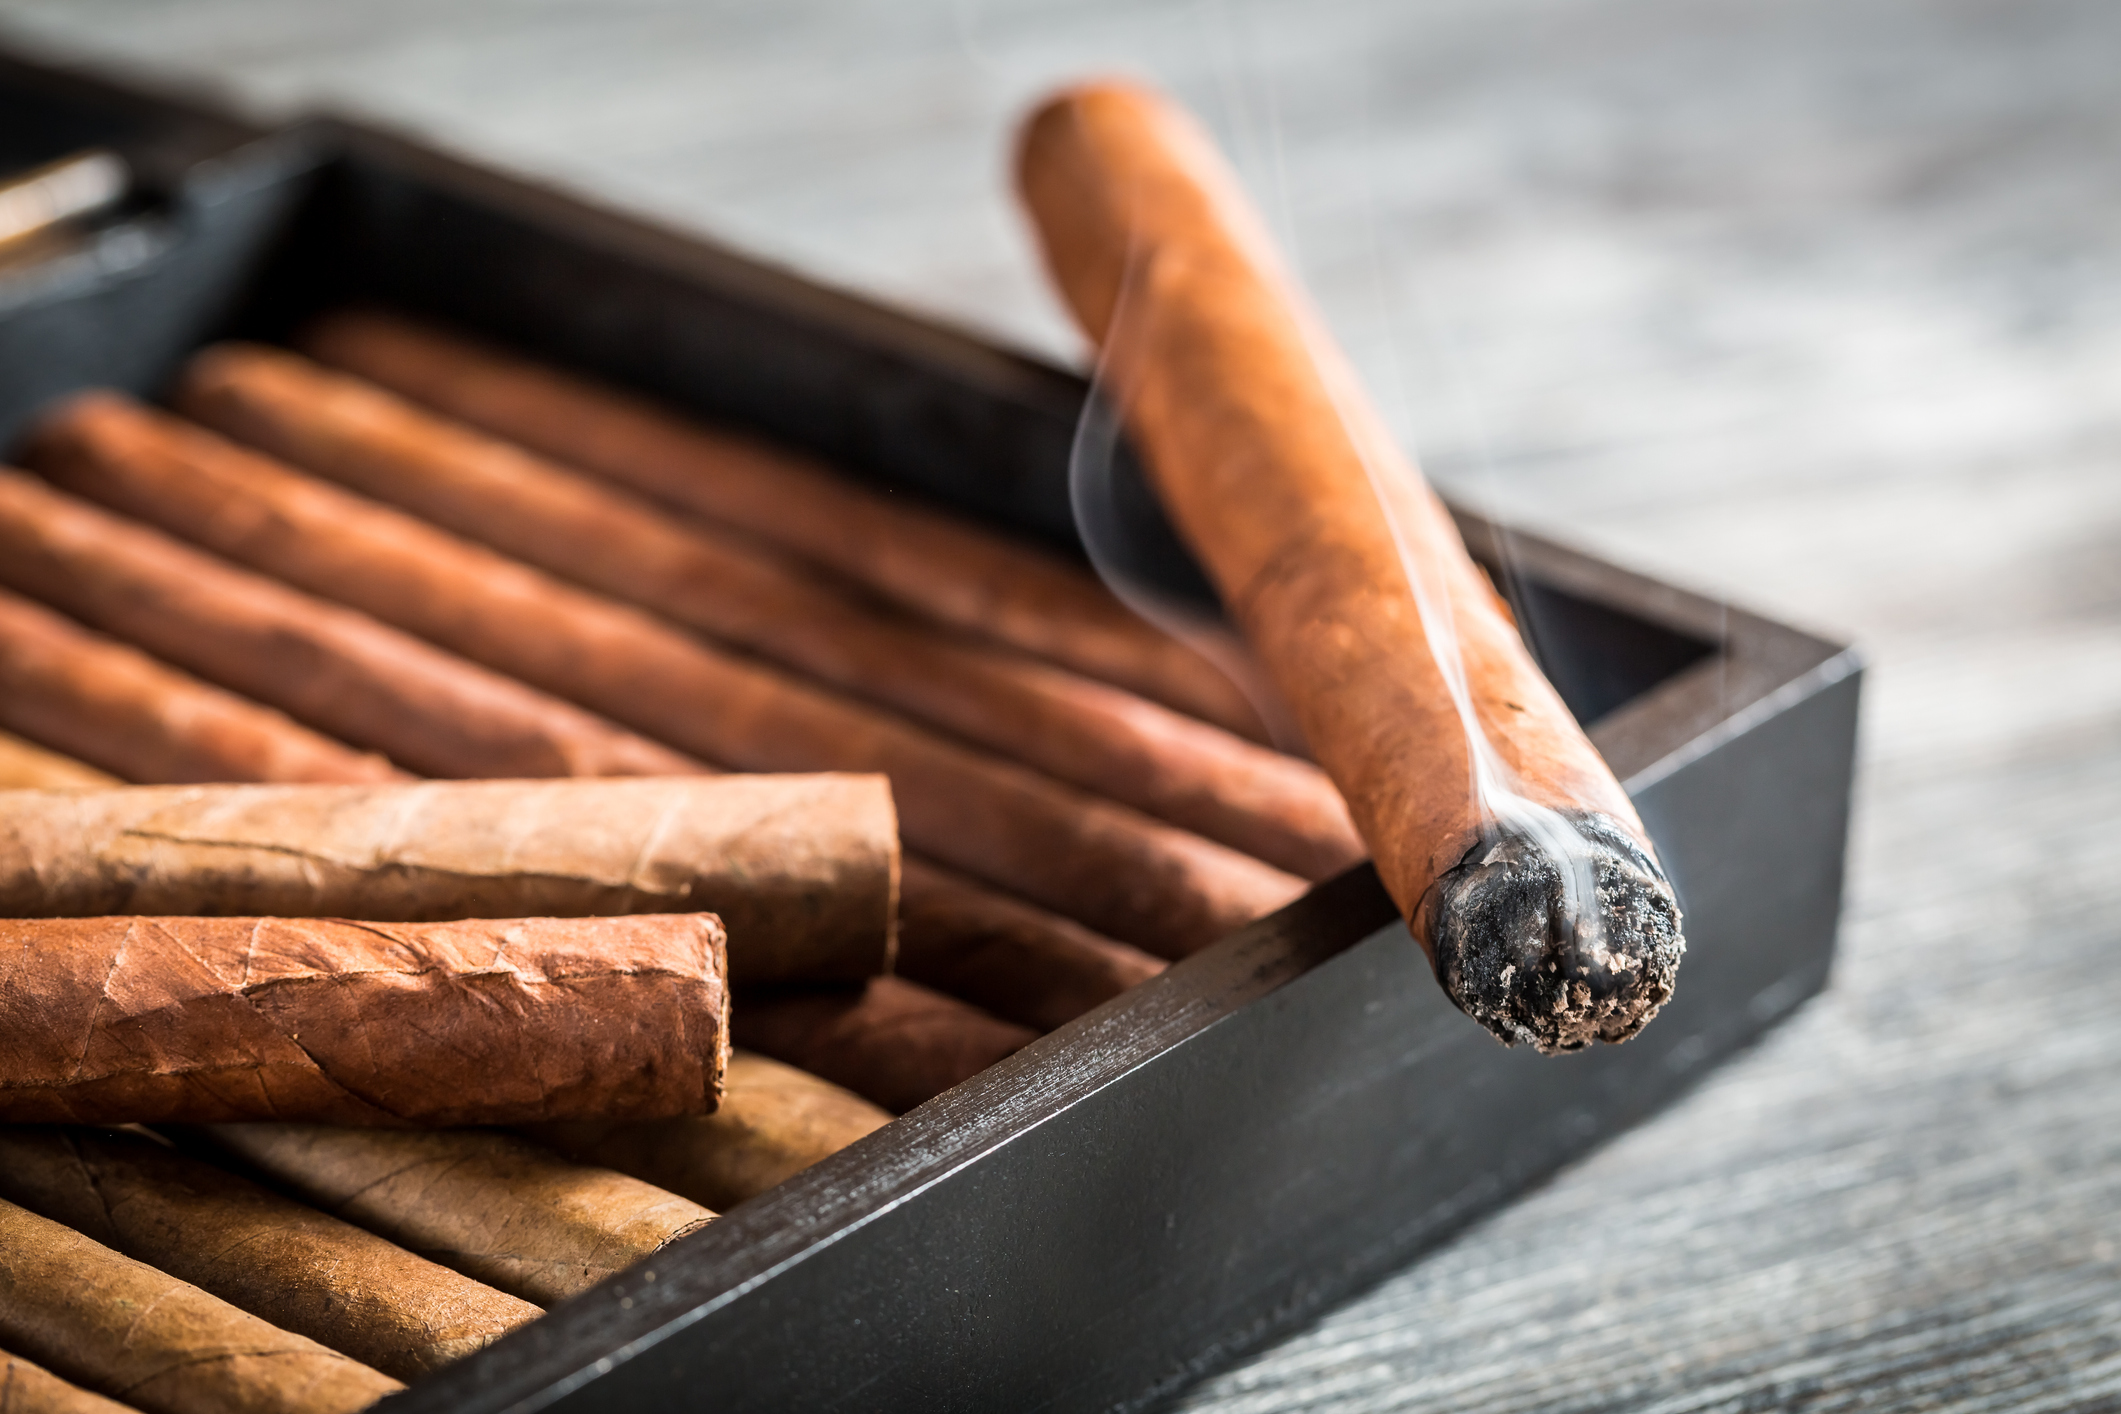 Burning cigar with smoke on wooden humidor